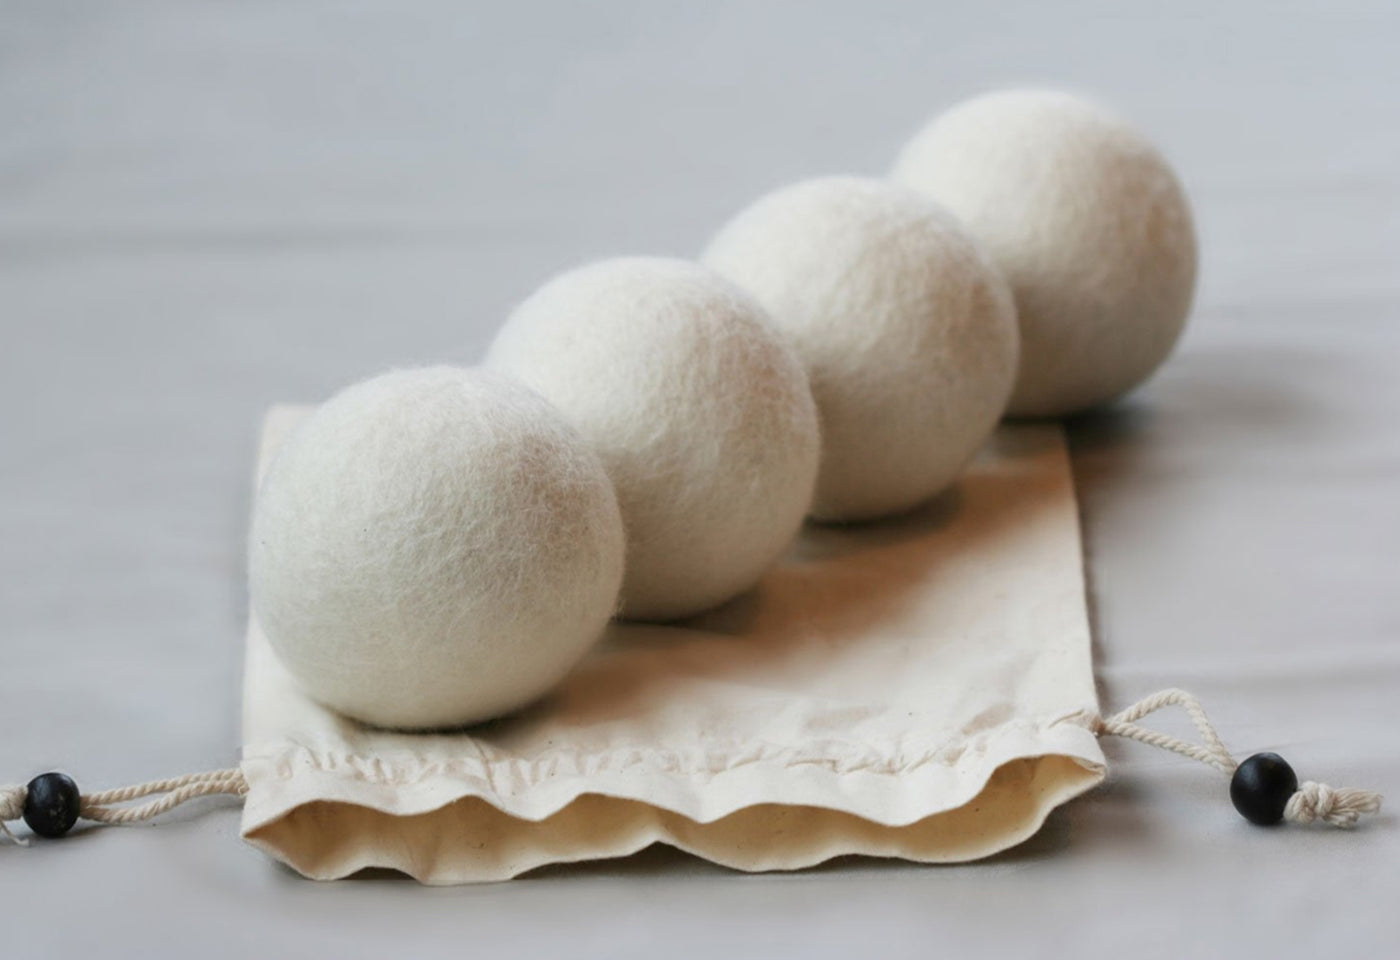 NZ Wool Dryer Balls - Brolly Sheets NZ